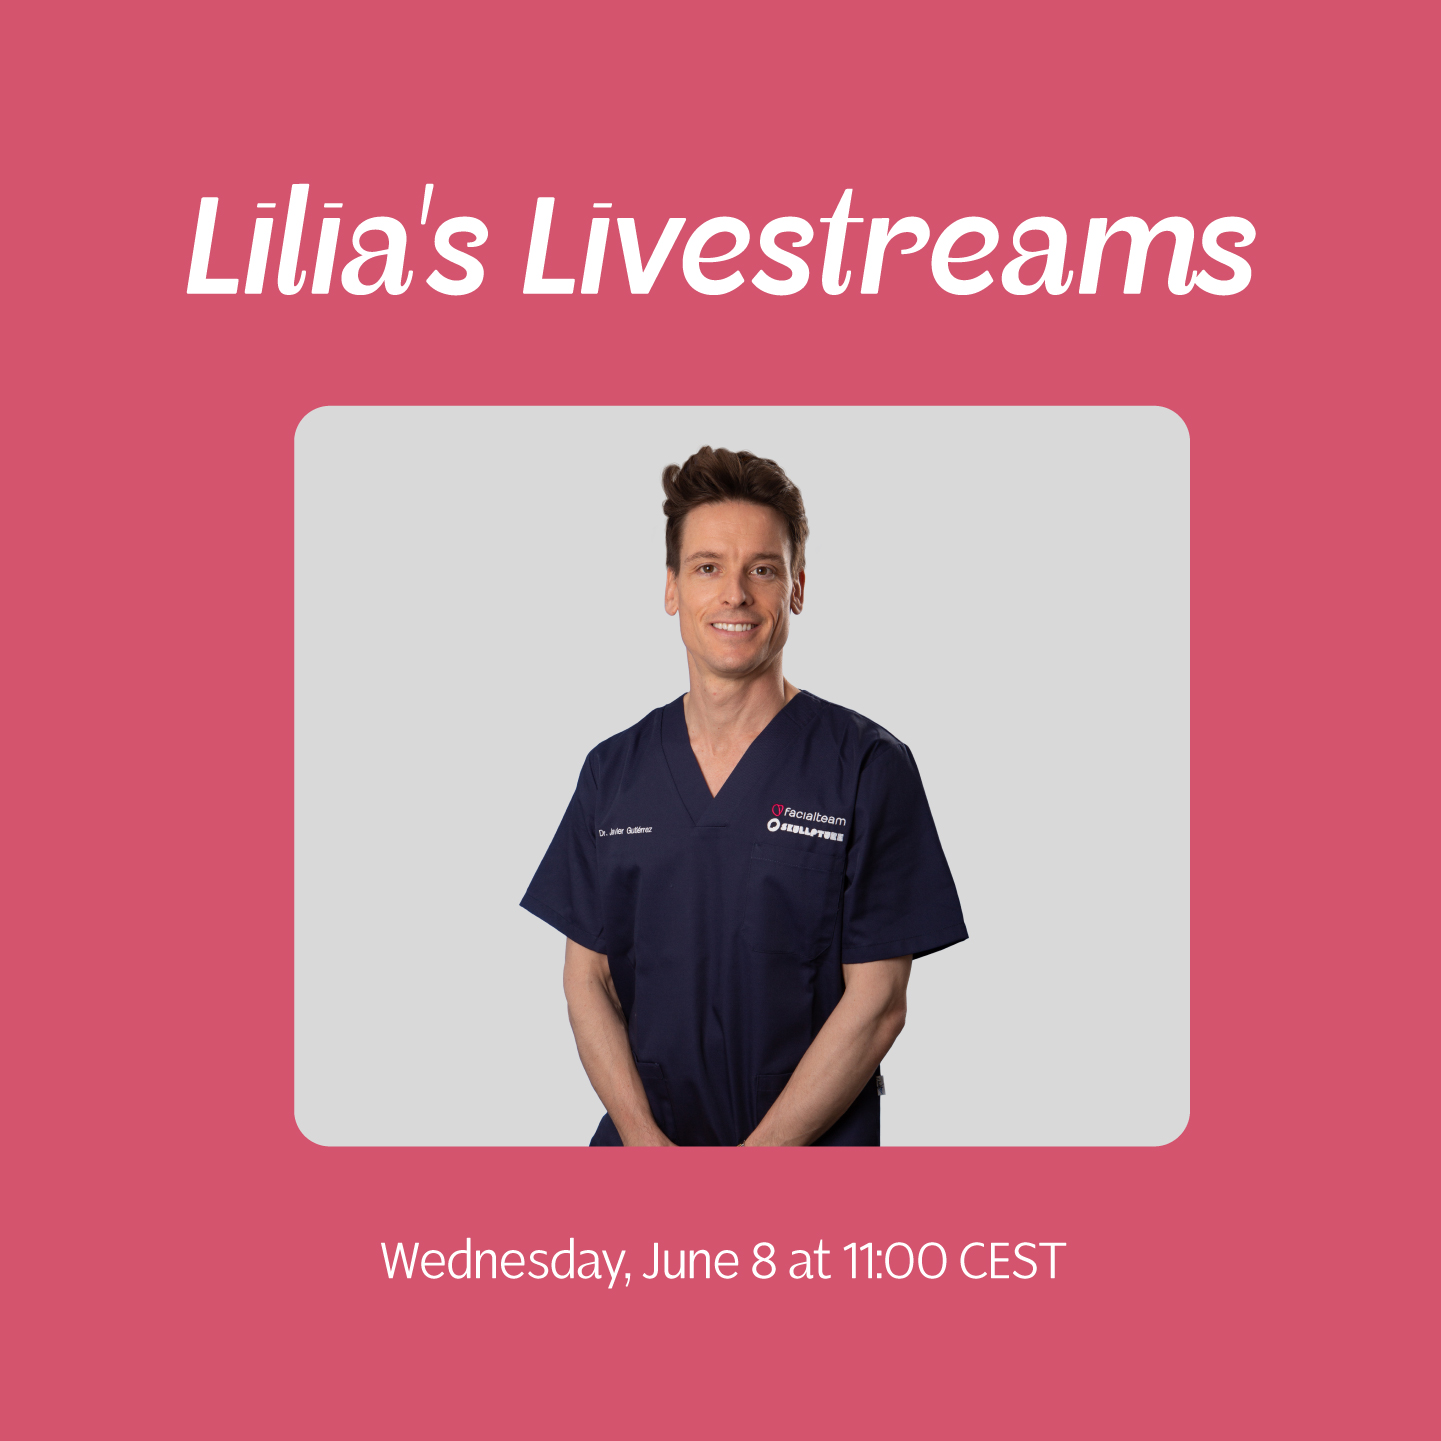 Lilia's Livestream is back next Wednesday, June 8 at 11:00 CEST We will meet meet with Dr. Javier Gutiérrez, FFS surgeon and director of Facialteam Barcelona.